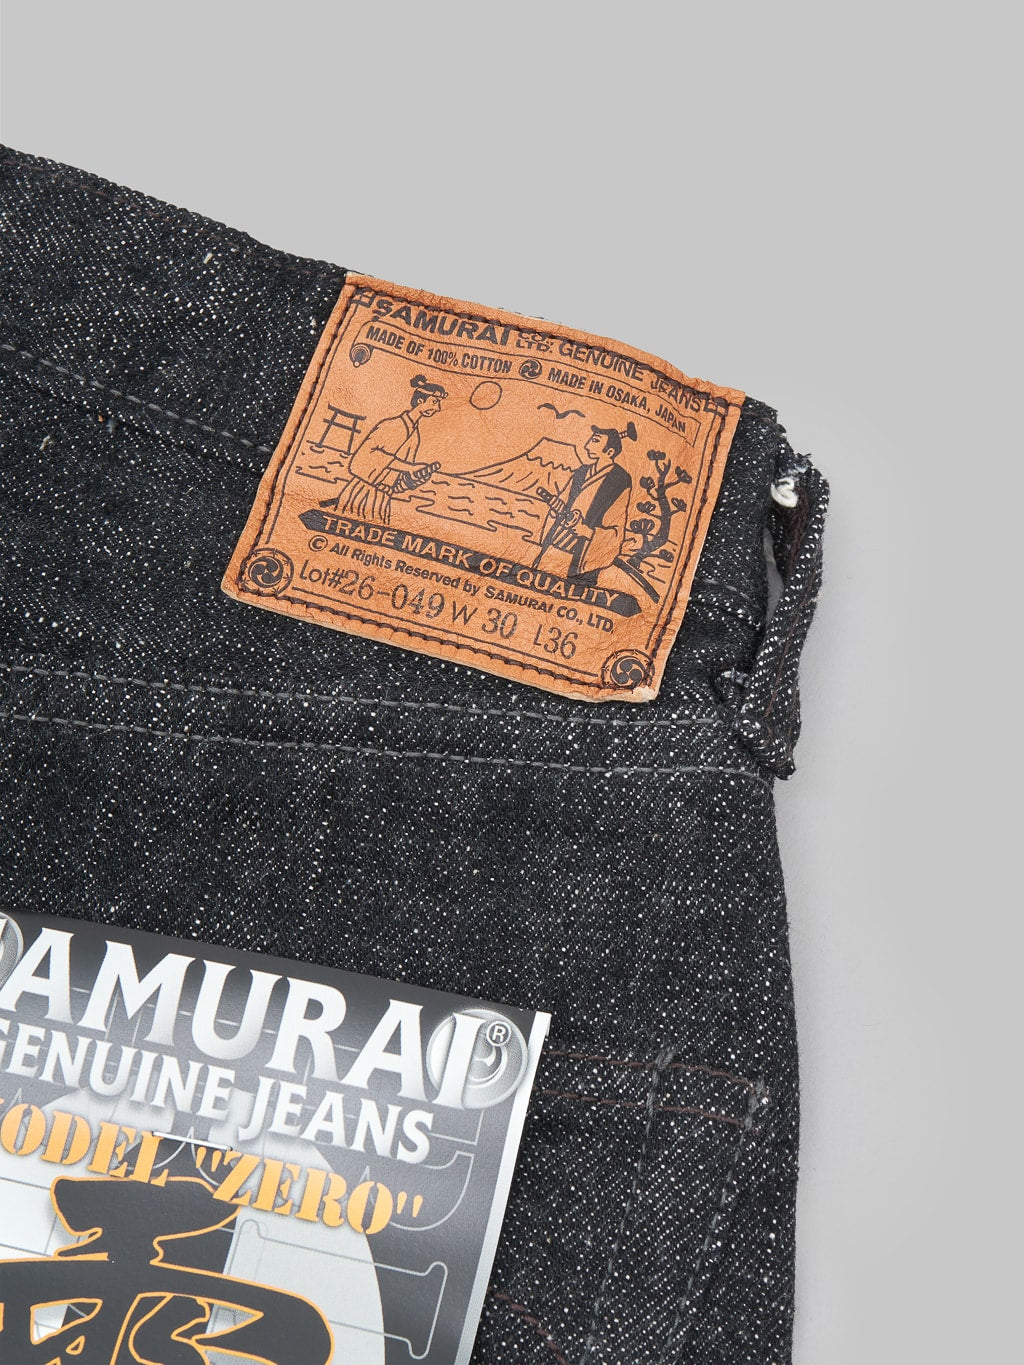 Samurai Jeans S5000BKII "Zero-Black" Slubby Black 17oz Regular Straight Jeans